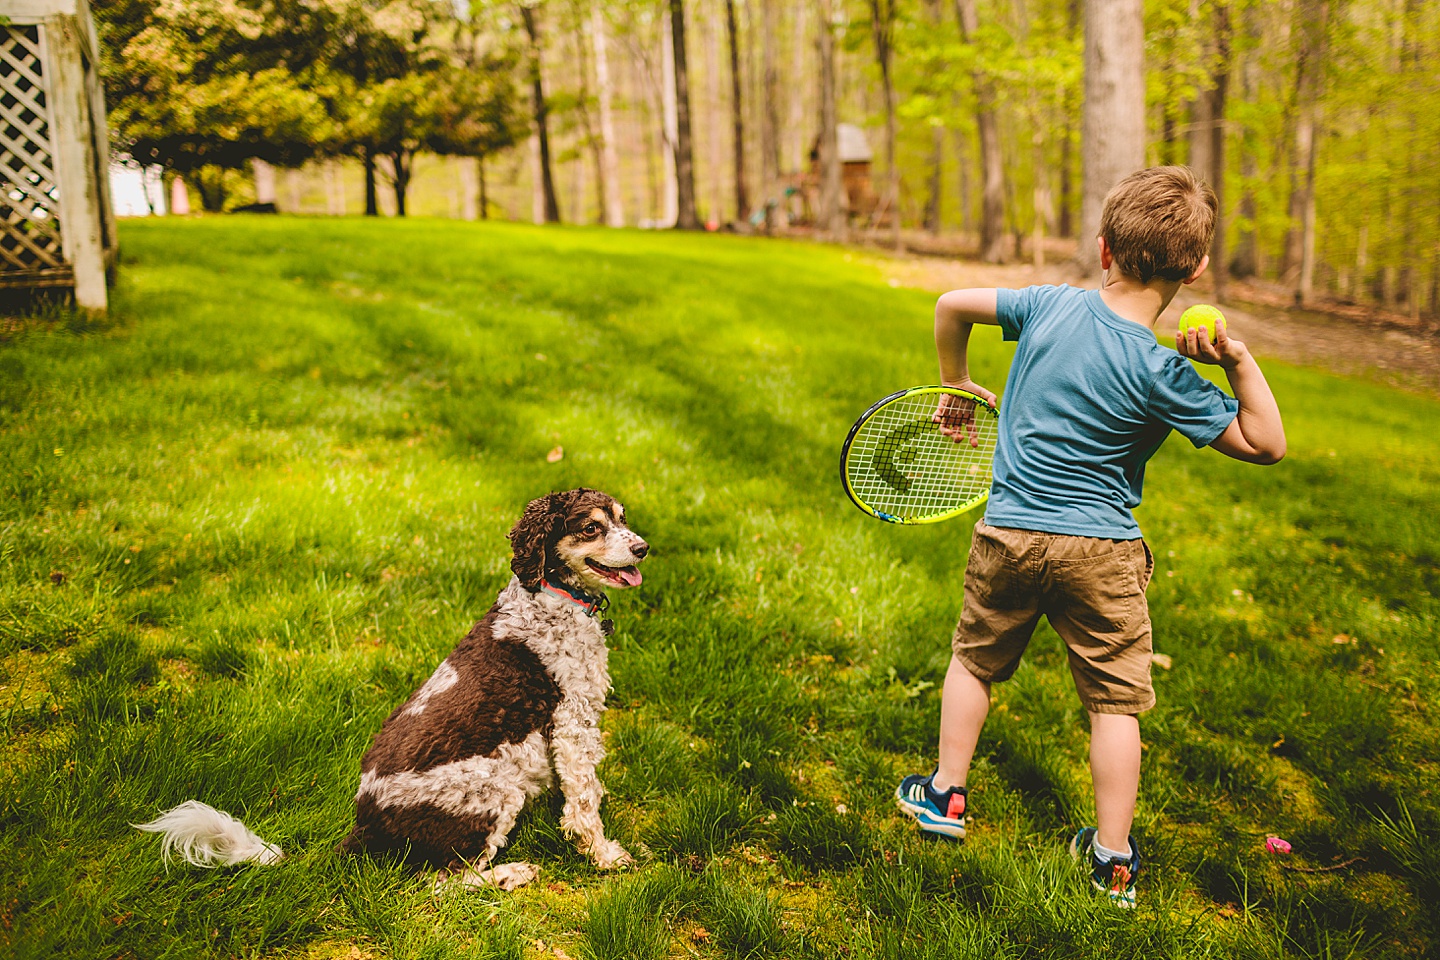 Boy throwing tennis ball for a dog